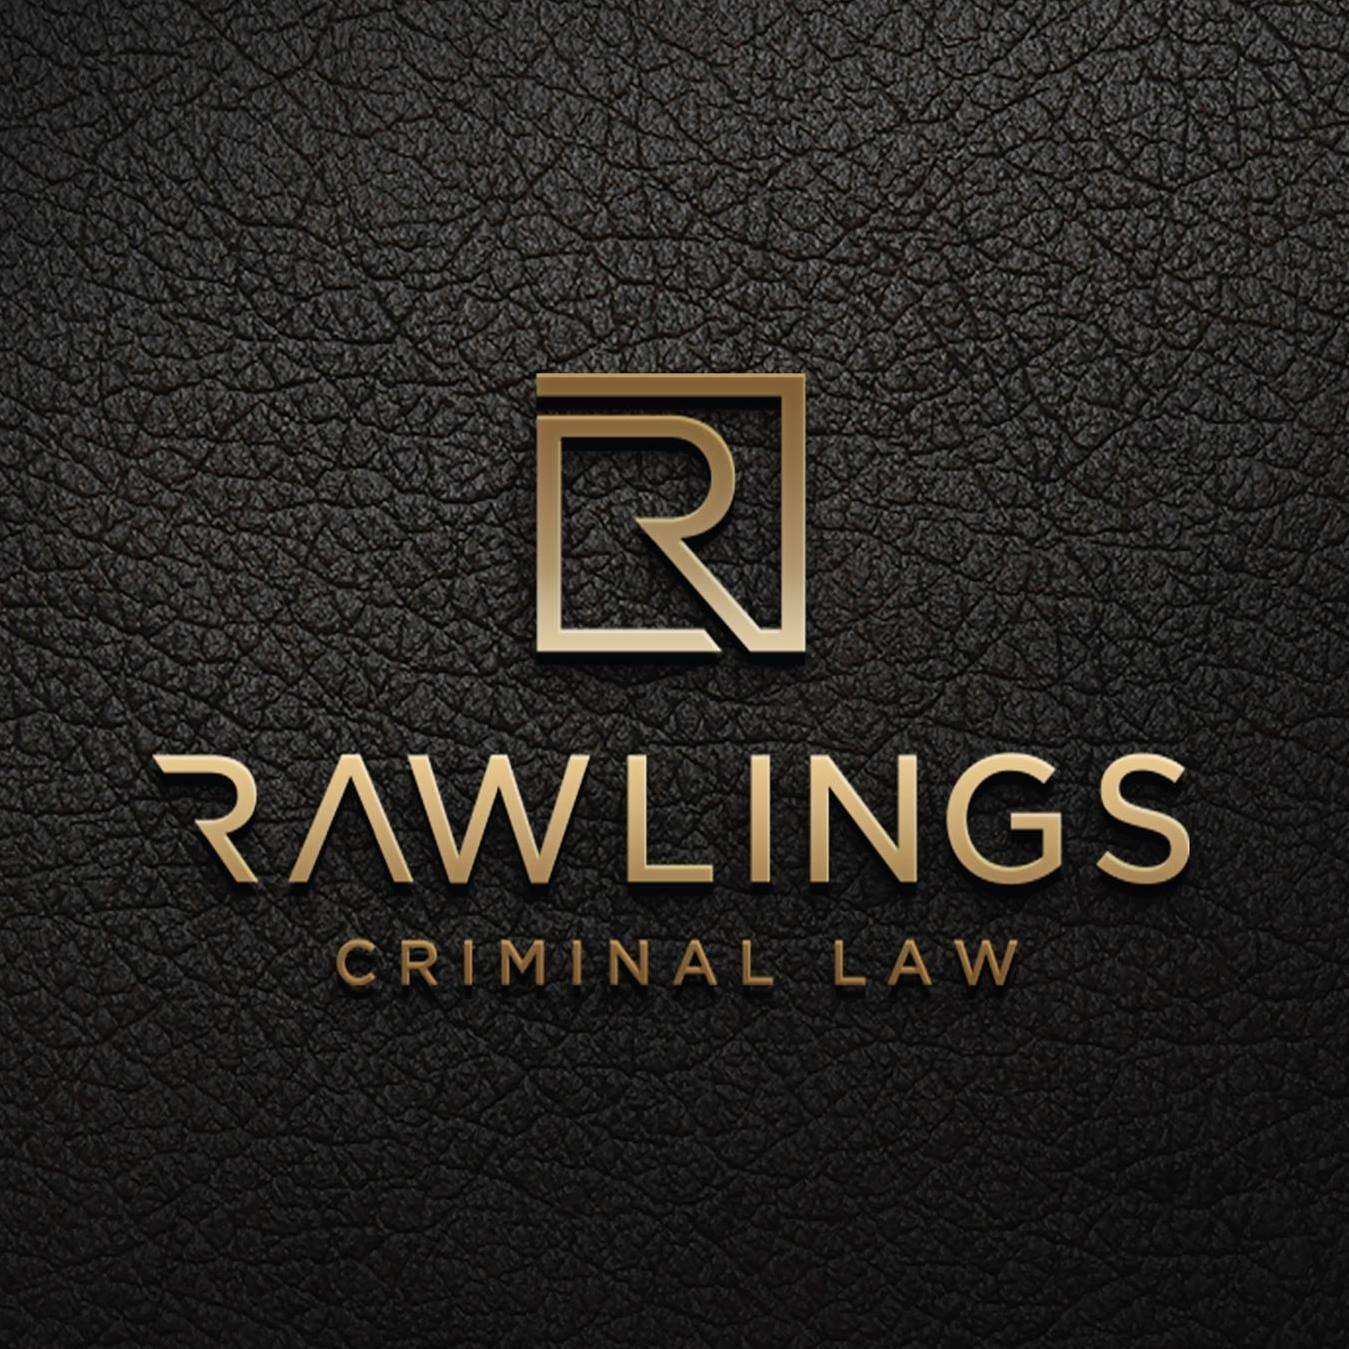 Rawlings Criminal   Law (rawlingscriminallaw)